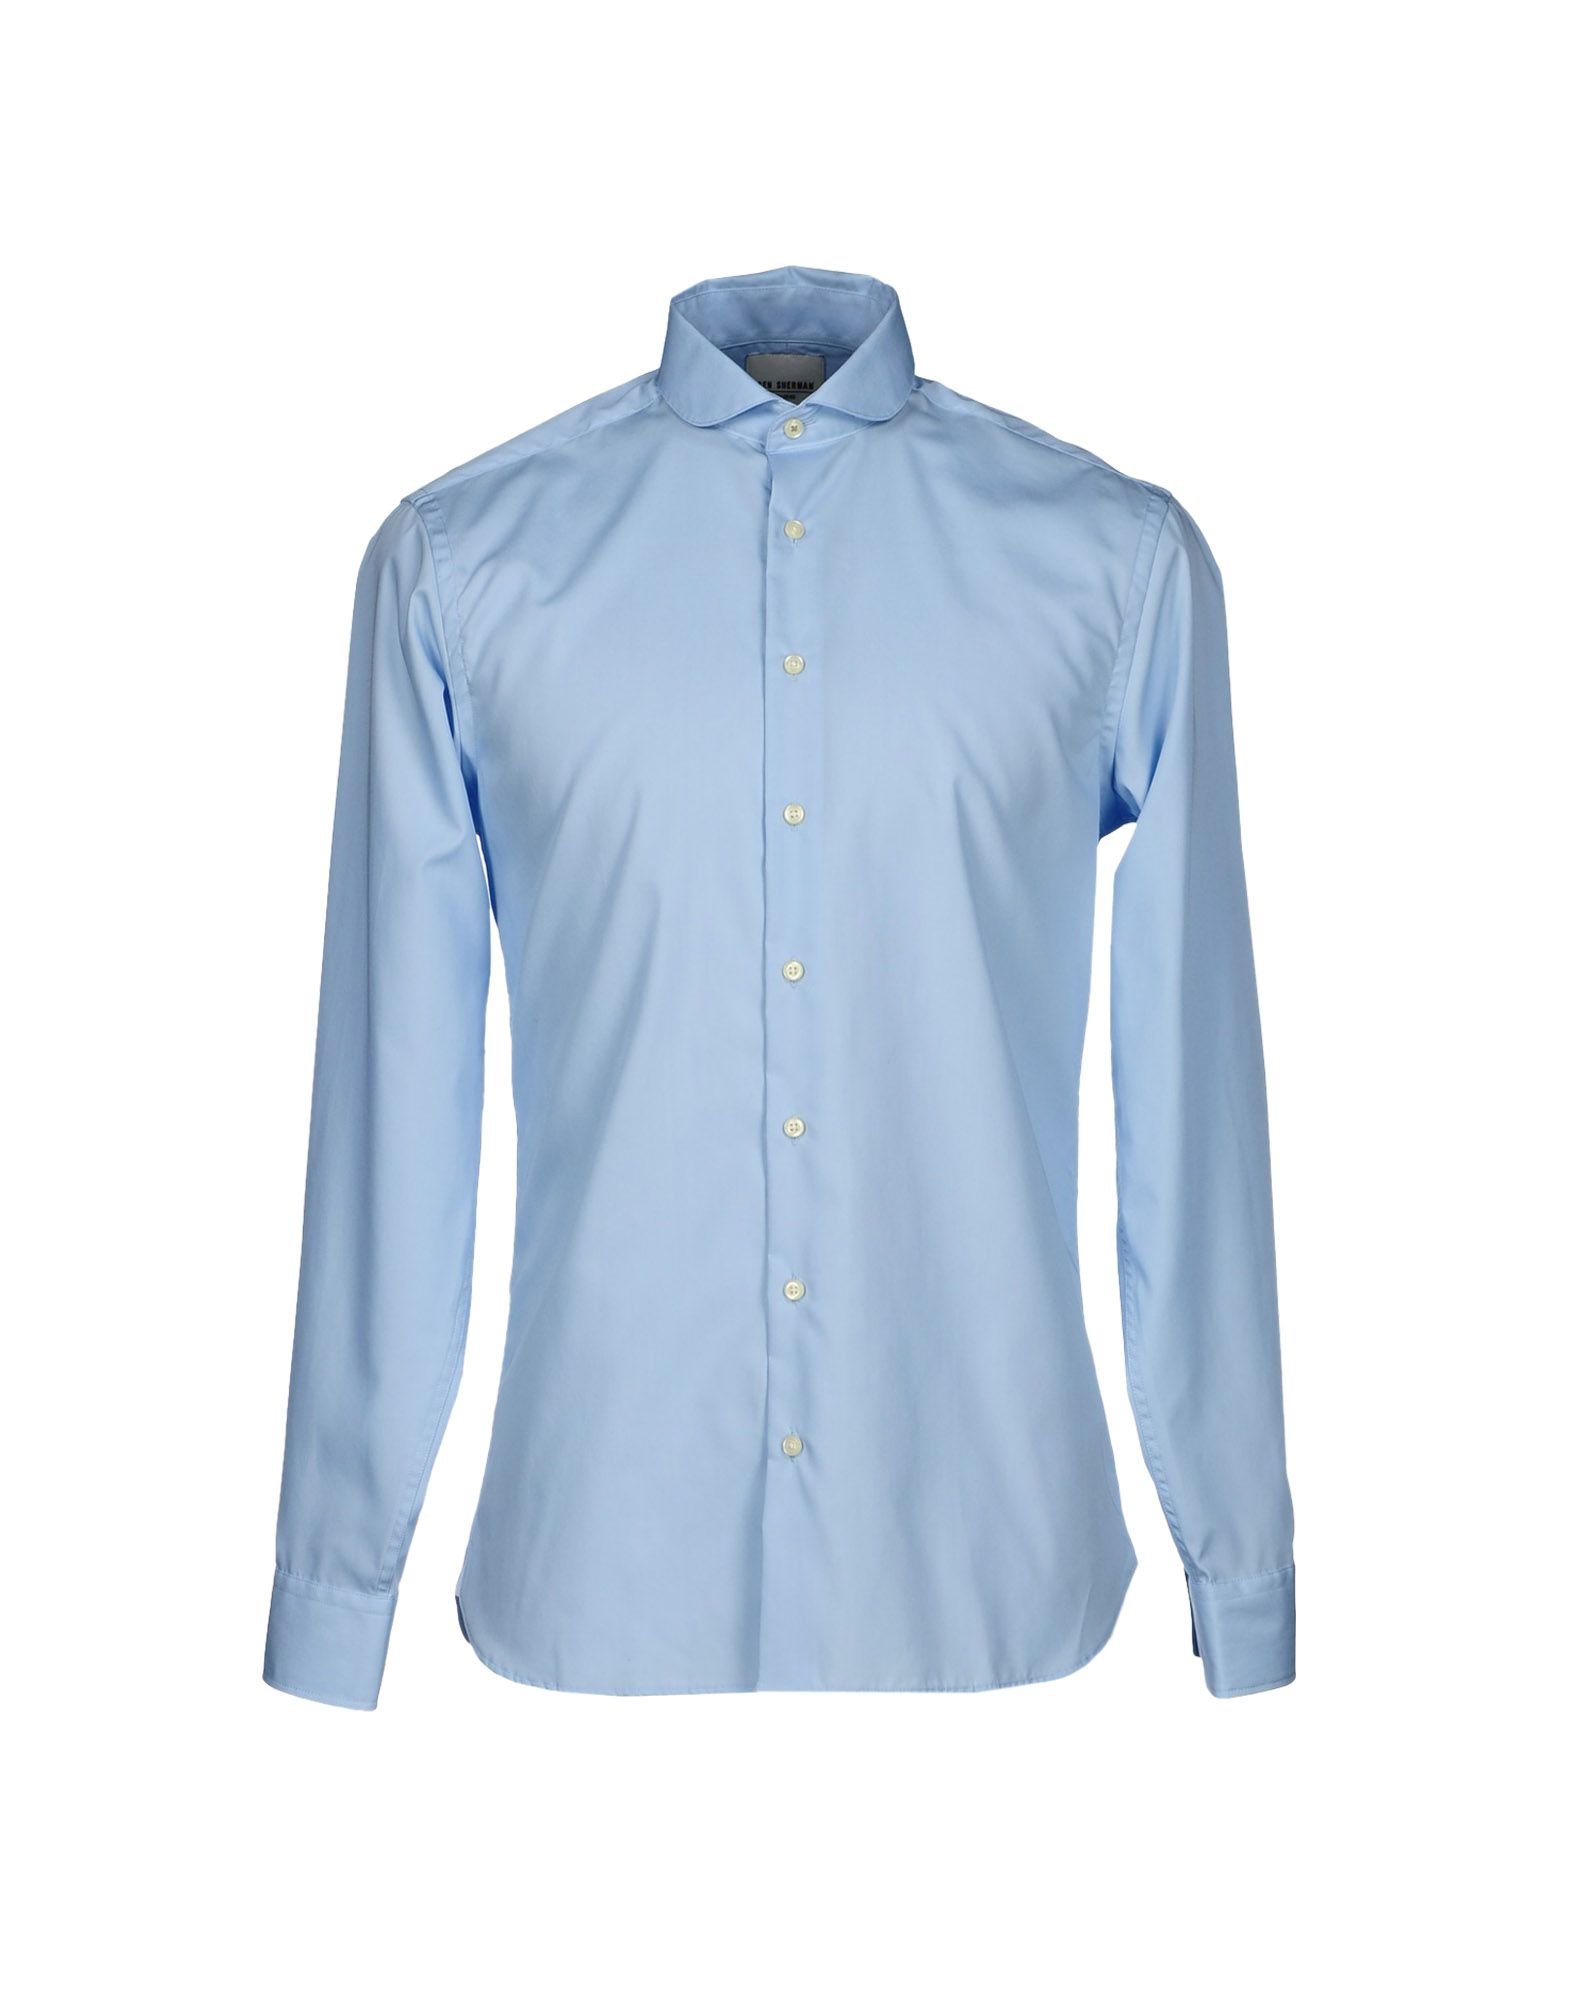 Ben sherman Shirt in Blue for Men (Sky blue) - Save 68% | Lyst